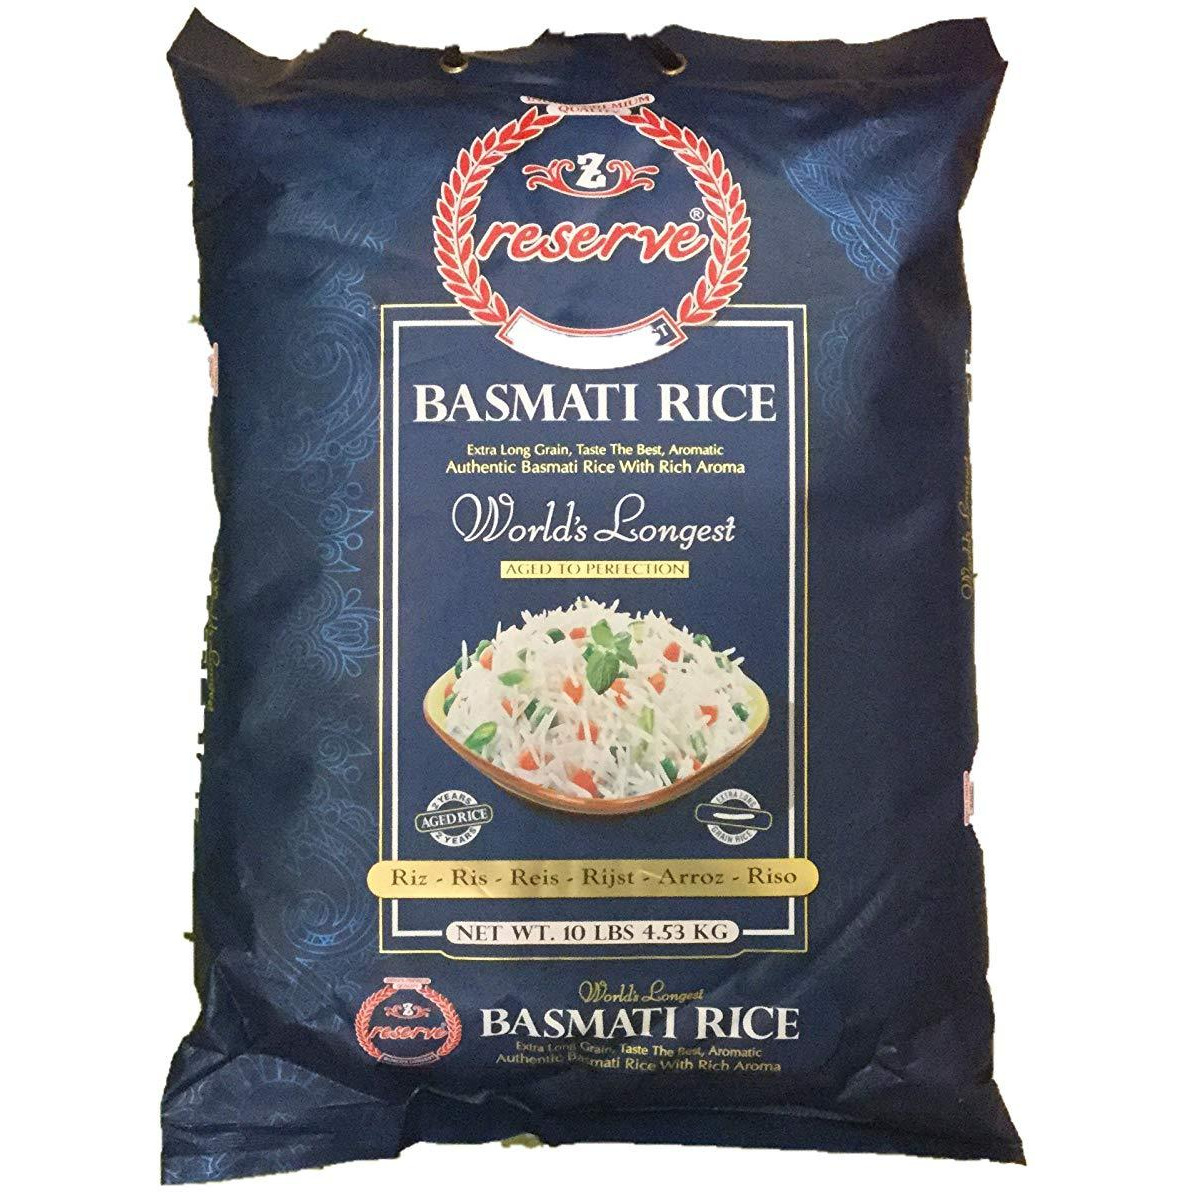 Case of 1 - Reserve Basmati Rice - 10 Lb